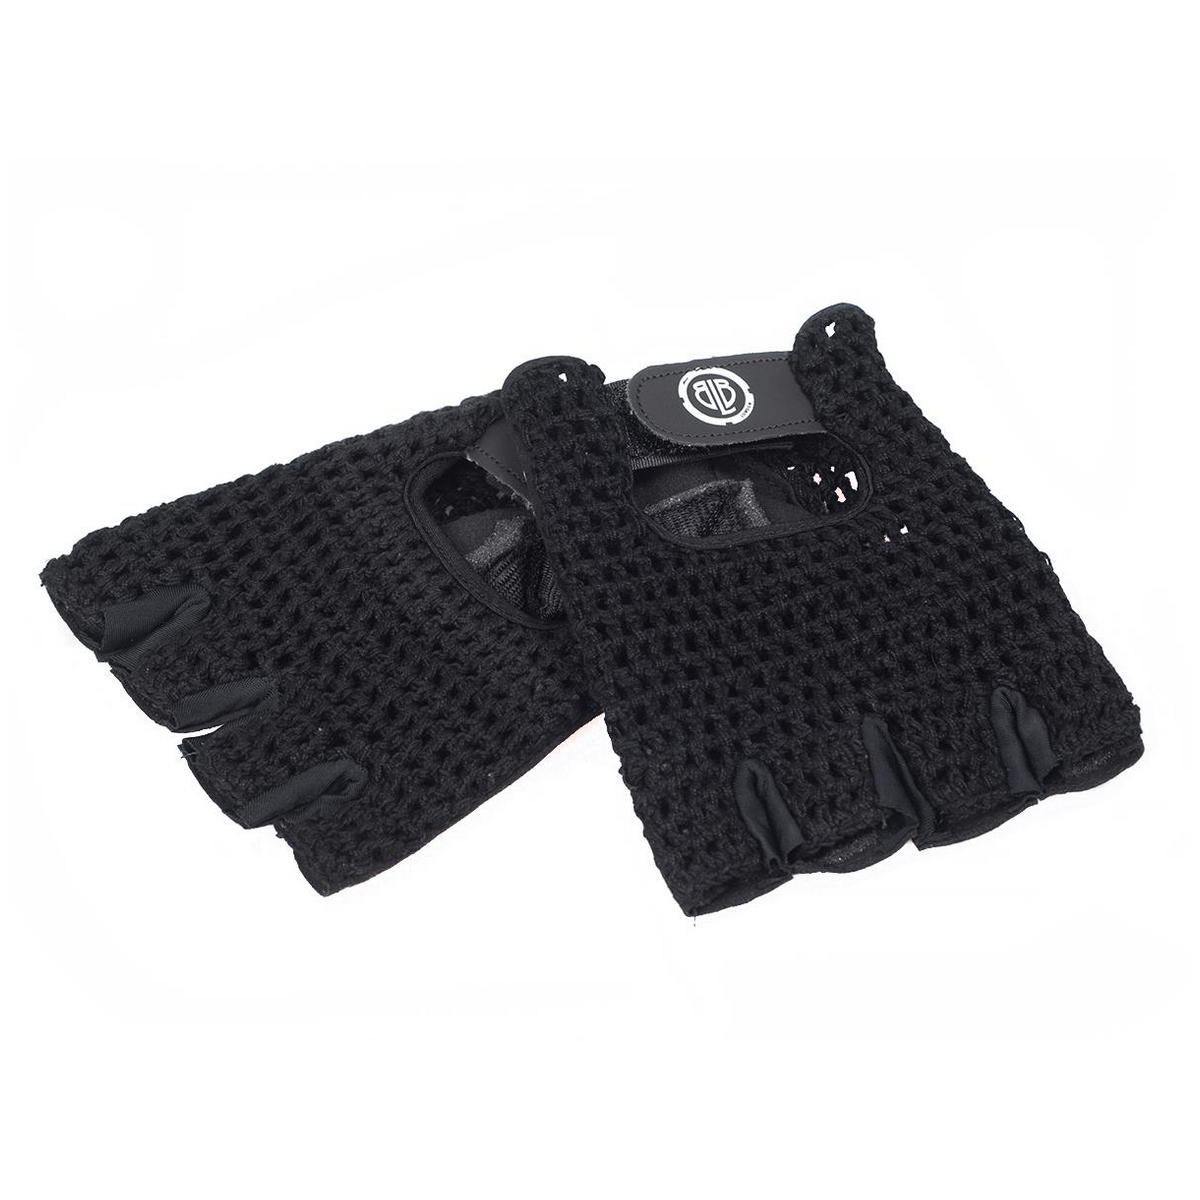 Vintage cycling gloves crochet string size M black